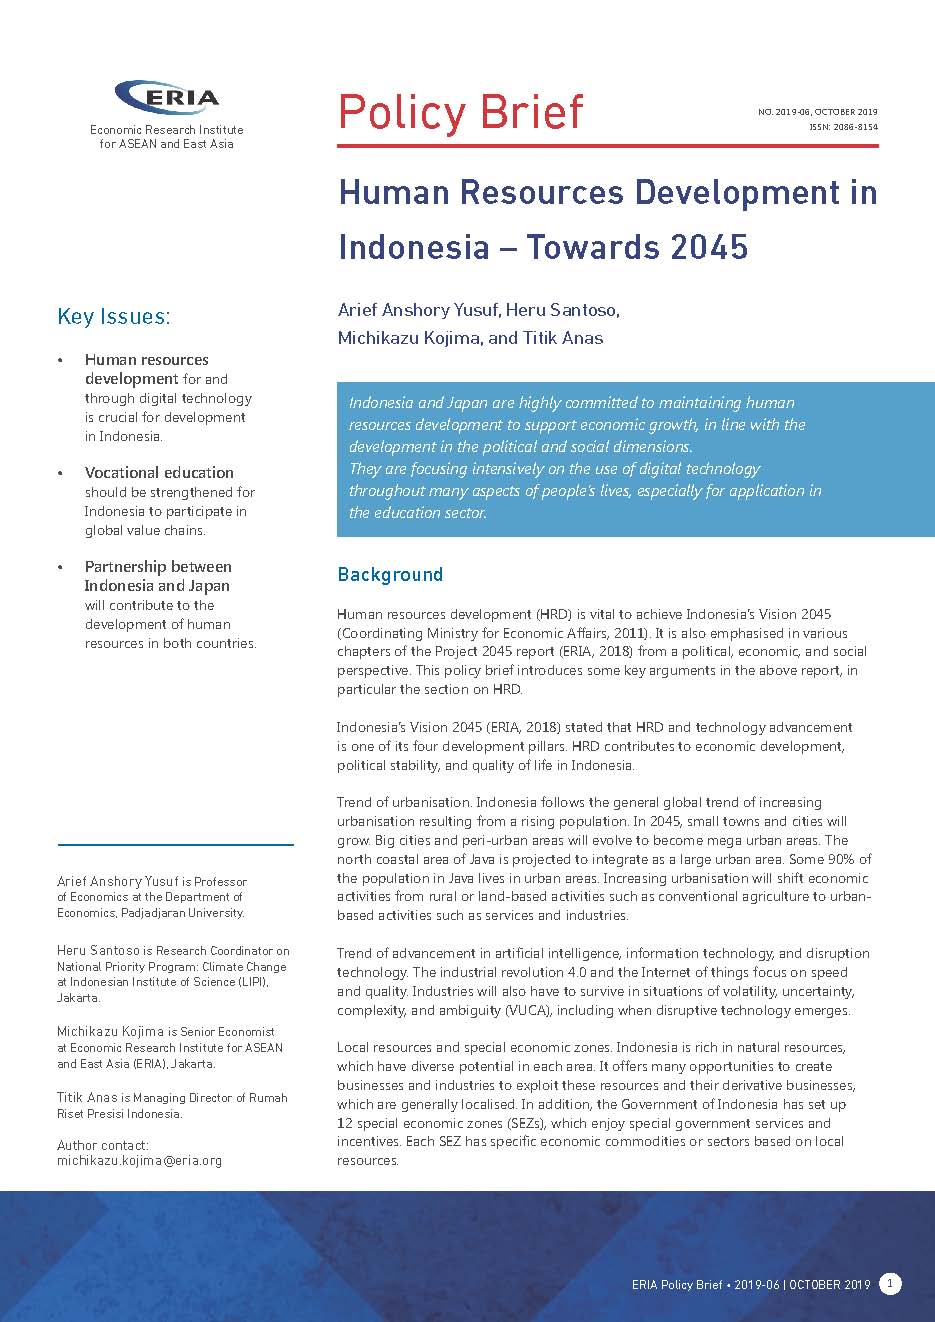 Human Resources Development in Indonesia - Towards 2045